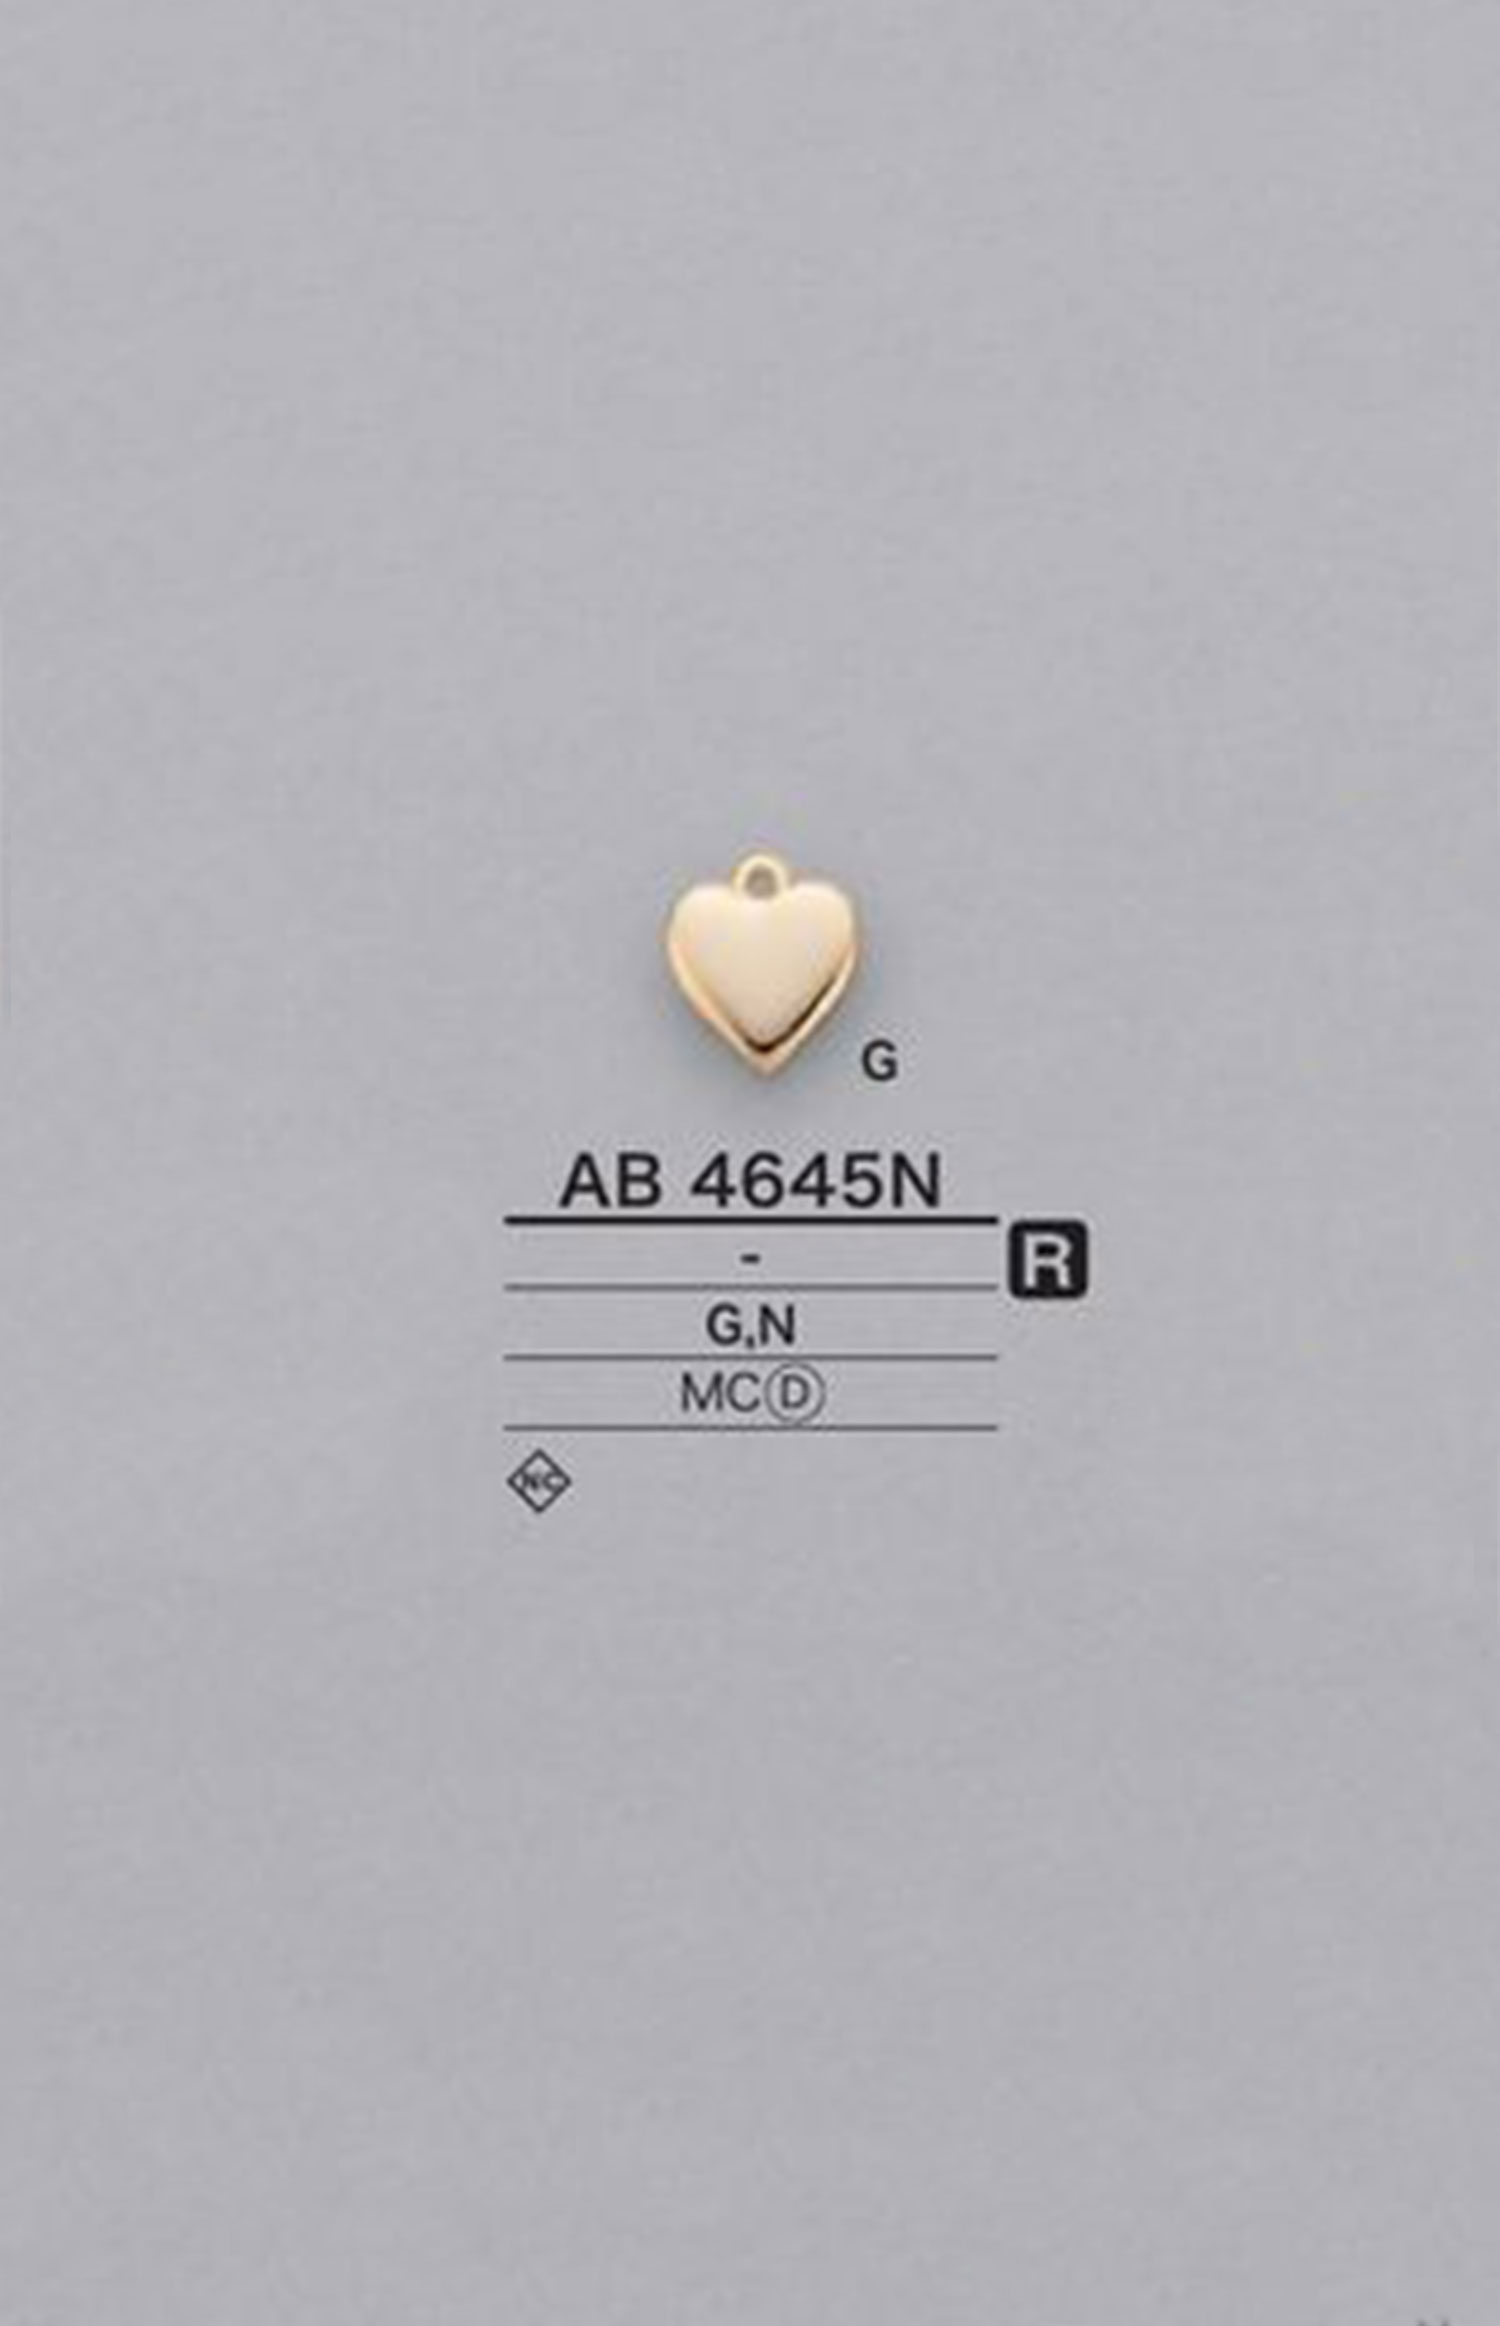 AB4645N 心形图形元素零件[杂货等] 爱丽丝纽扣